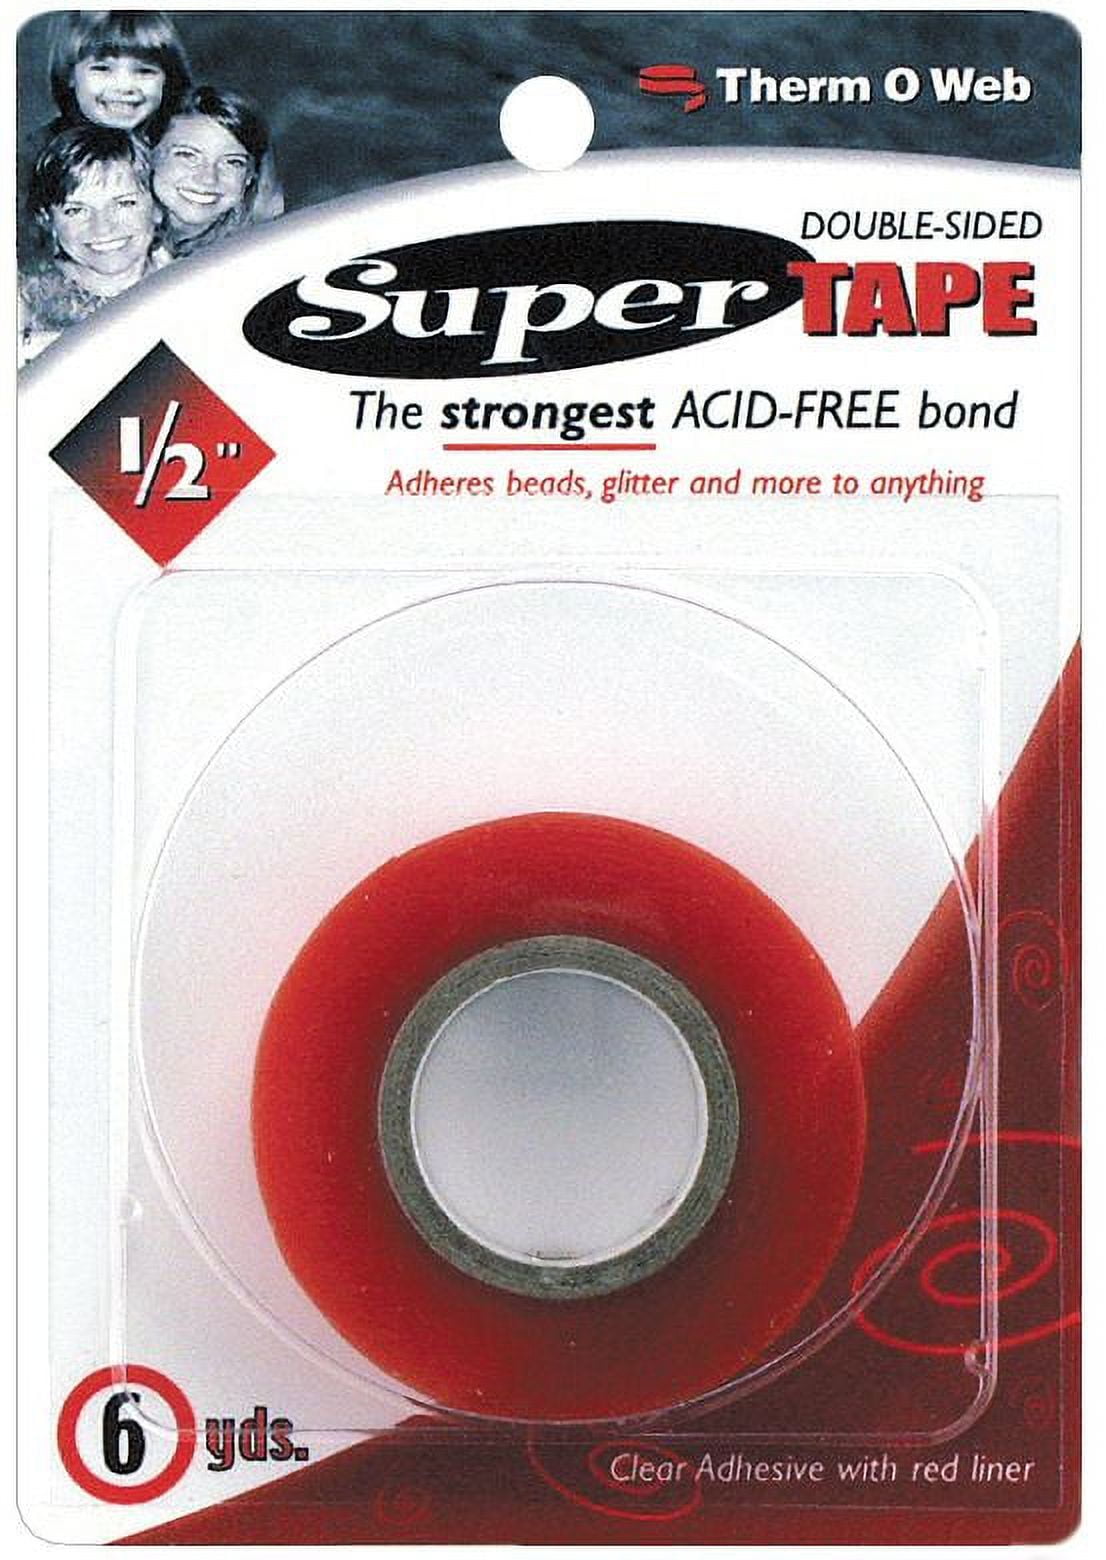 My latest purchase - OSMABET instant tape eraser